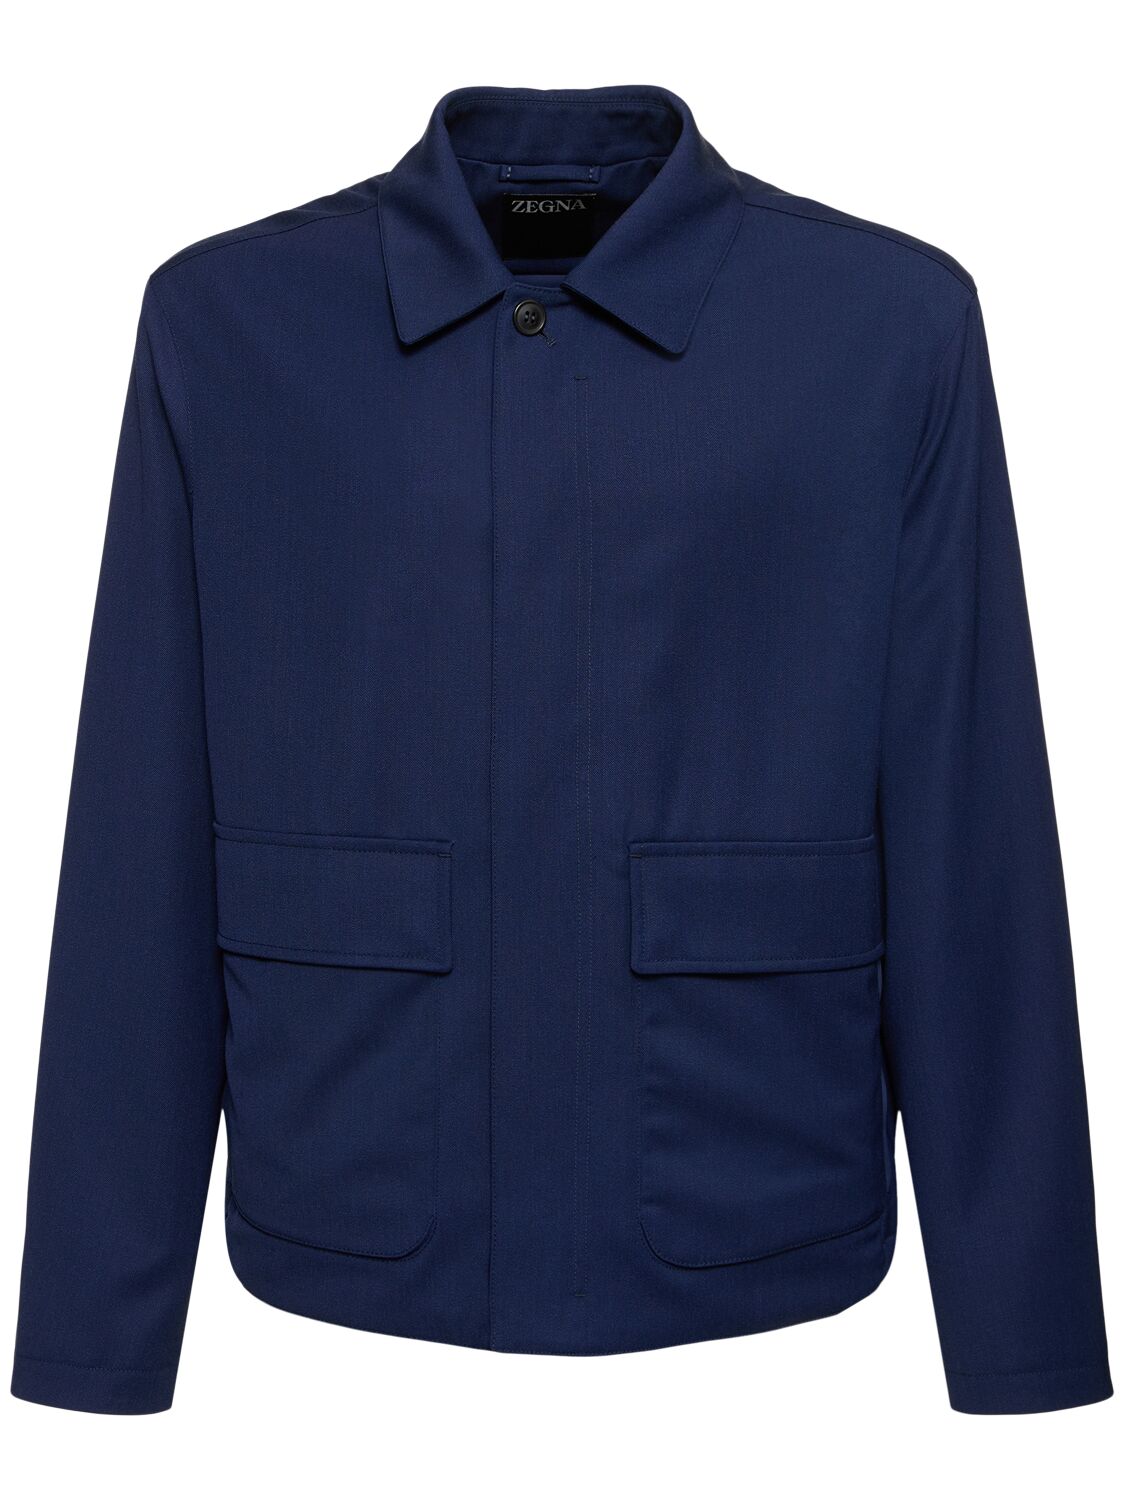 Zegna Wool & Silk Water Repellent Jacket In Blue